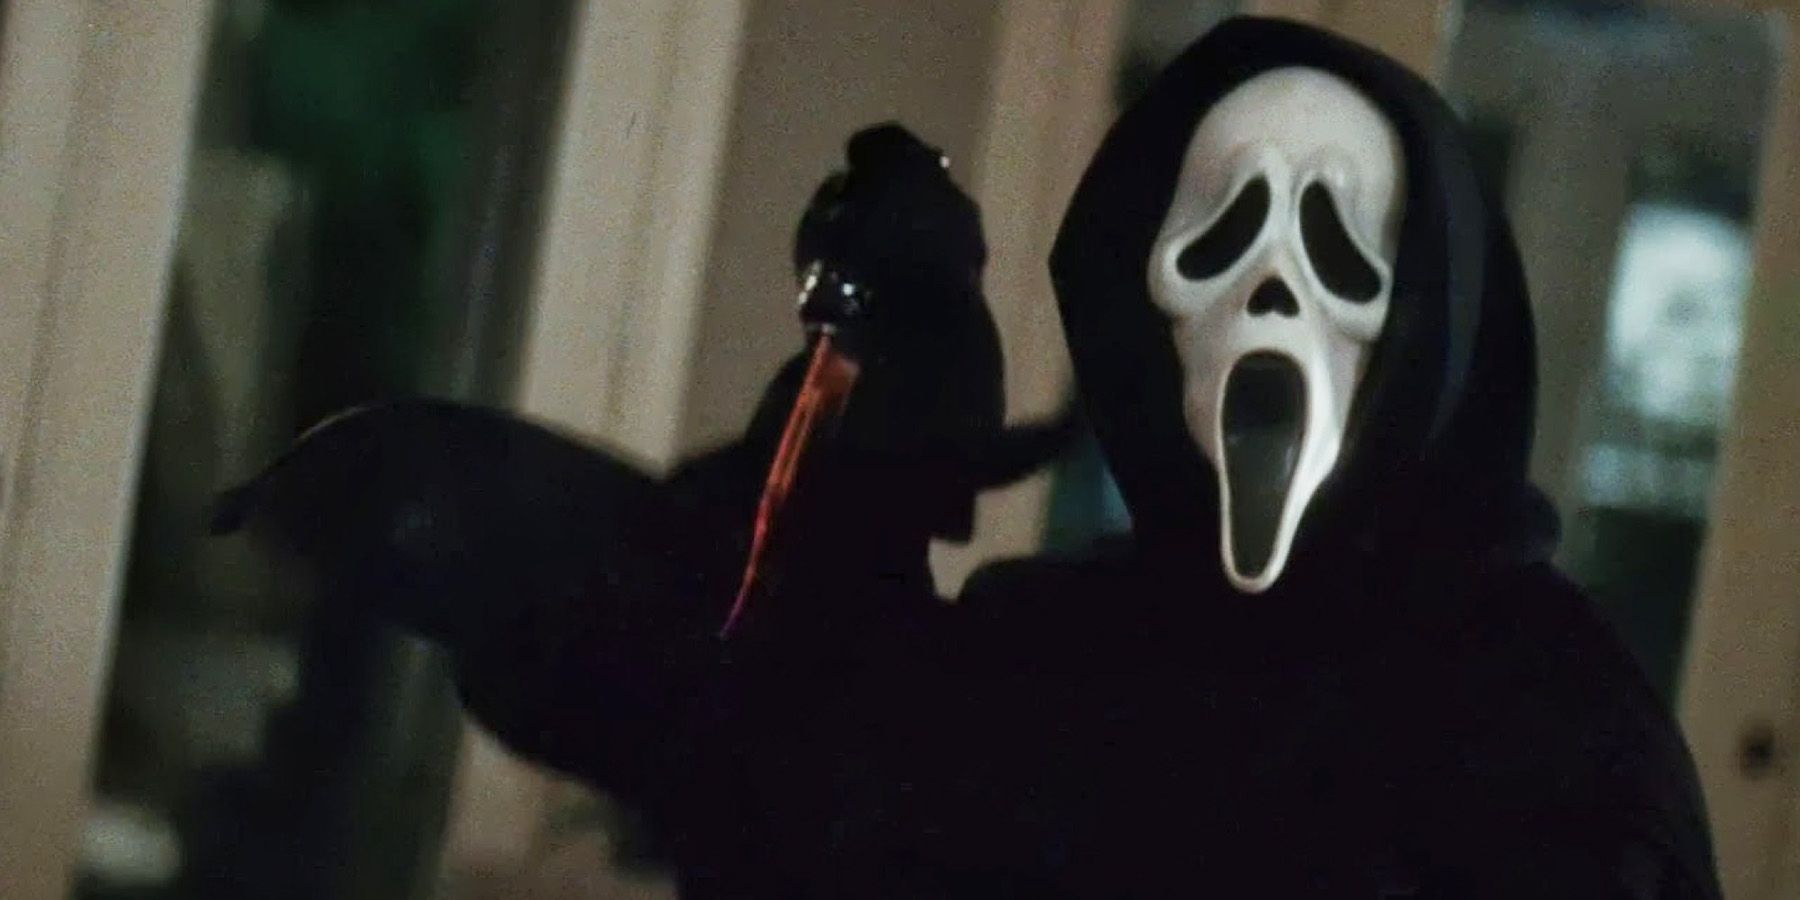 Ghostface is back in Scream 2